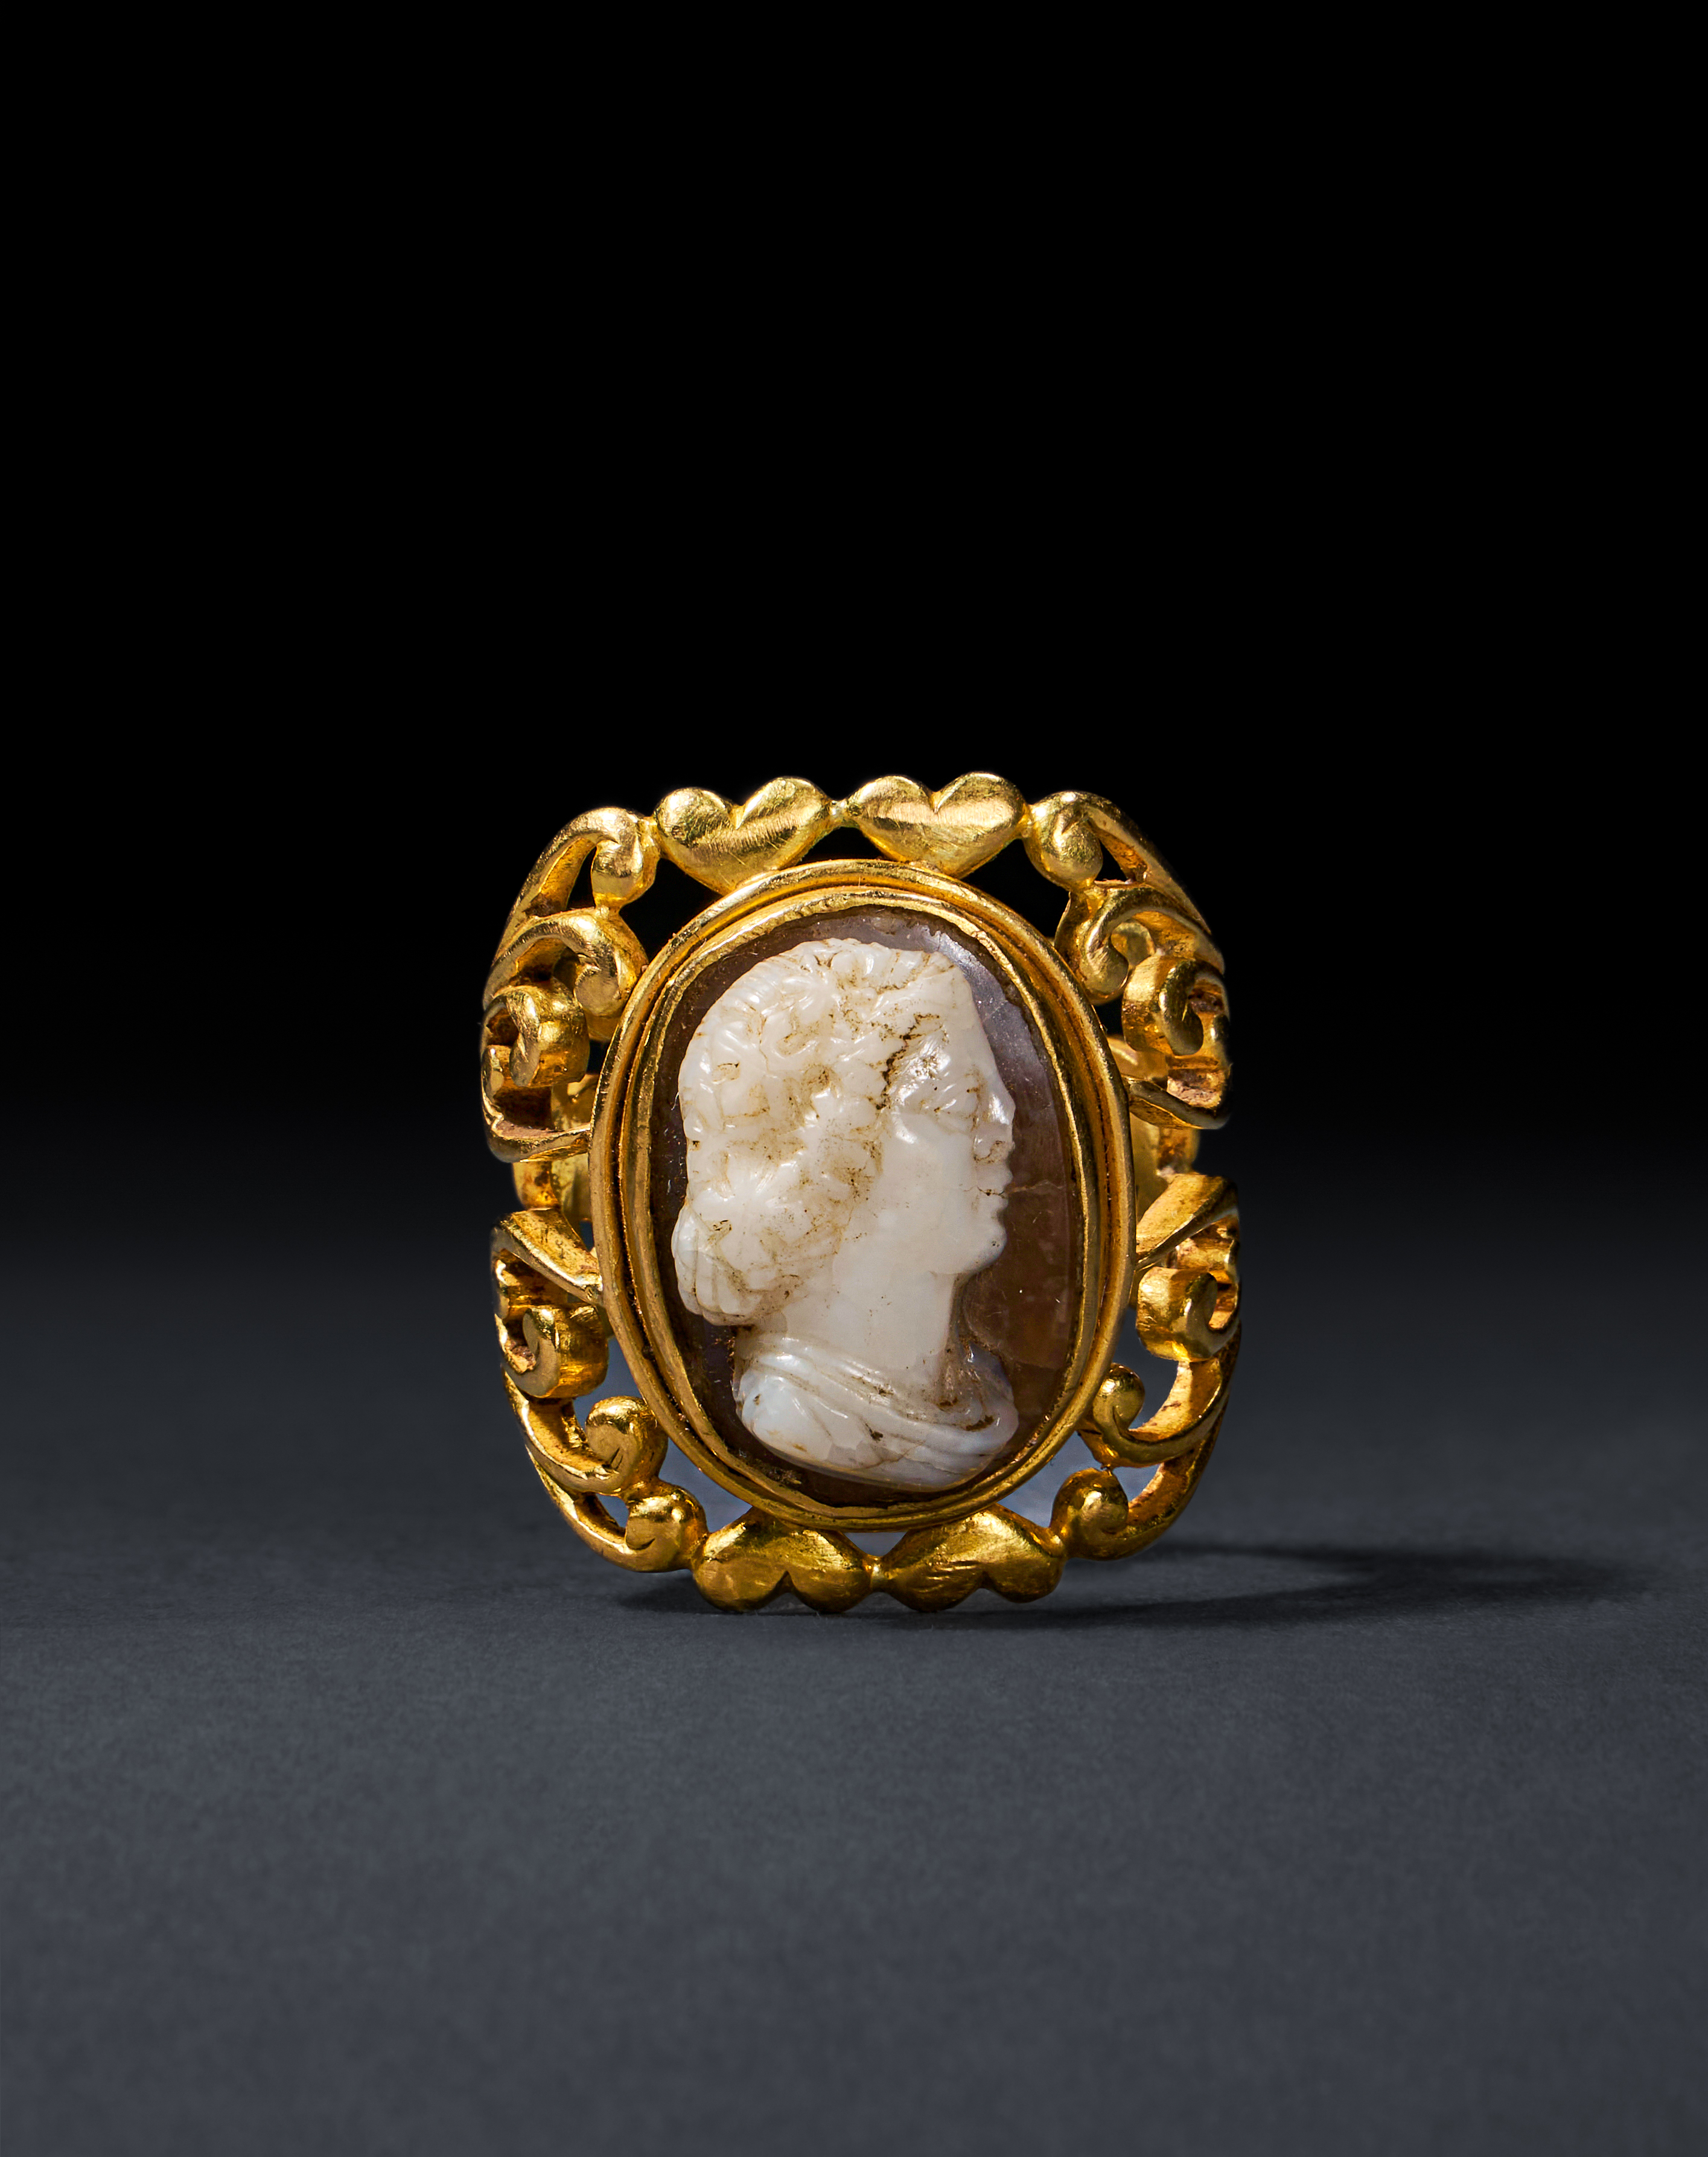 A GOLD ROMAN CAMEO RING OF A GODDESS, CIRCA 1ST CENTURY B.C.-1ST CENTURY A.D.